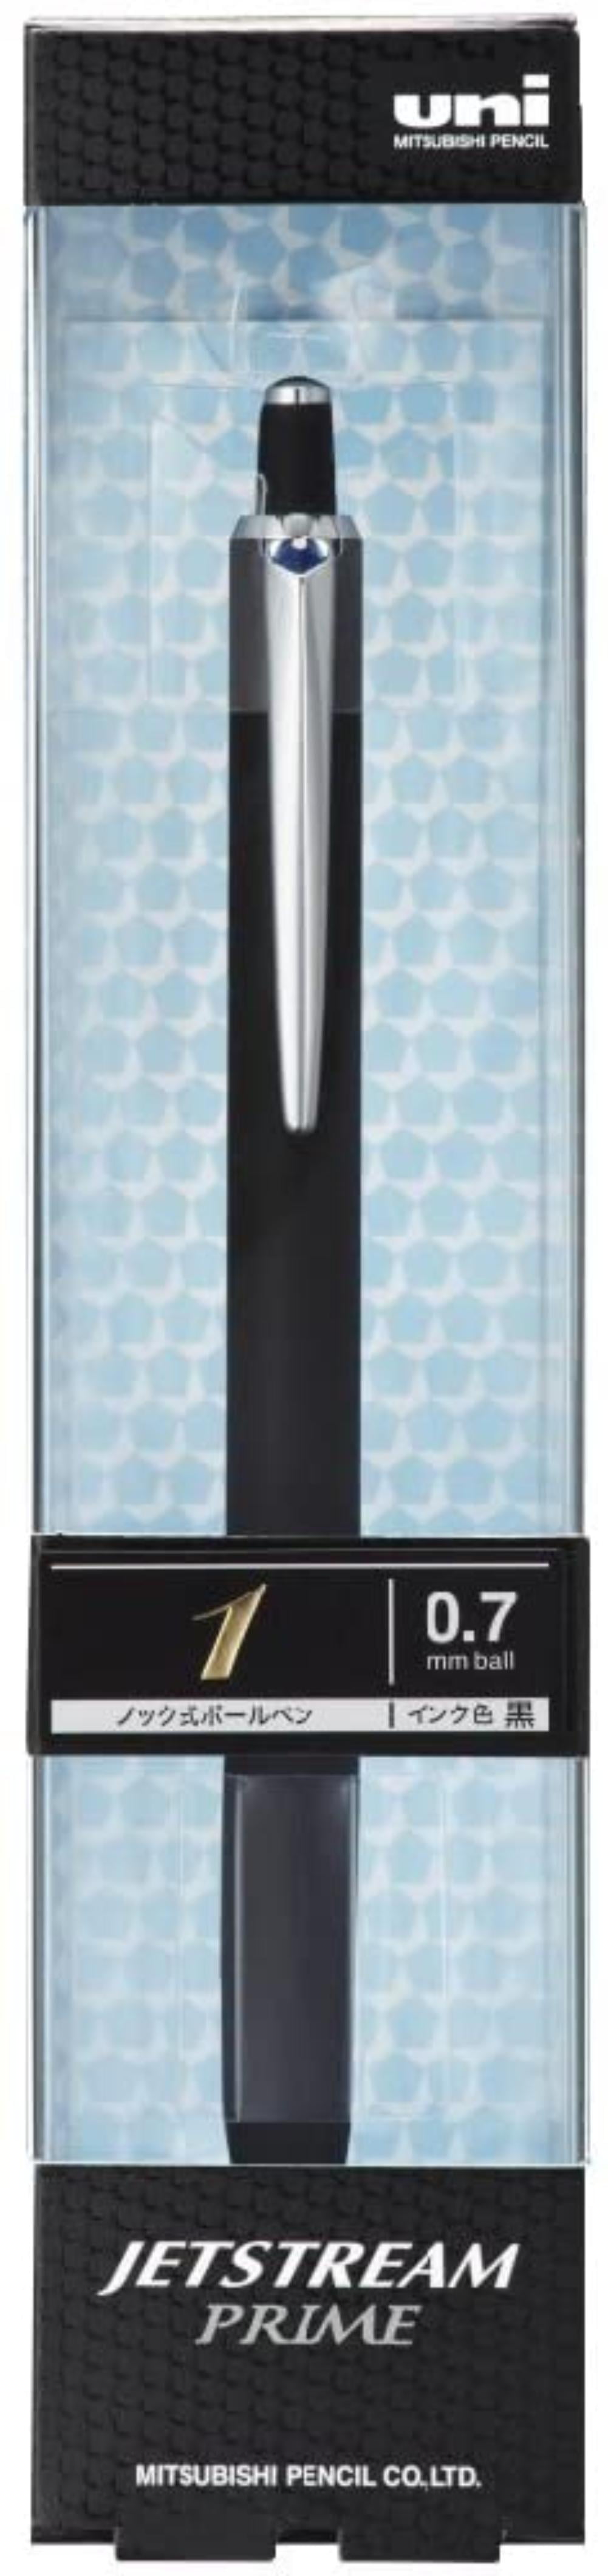 Ltd Mitsubishi Pencil Co. oil-based ballpoint pen jet stream prime 0.7 black S 